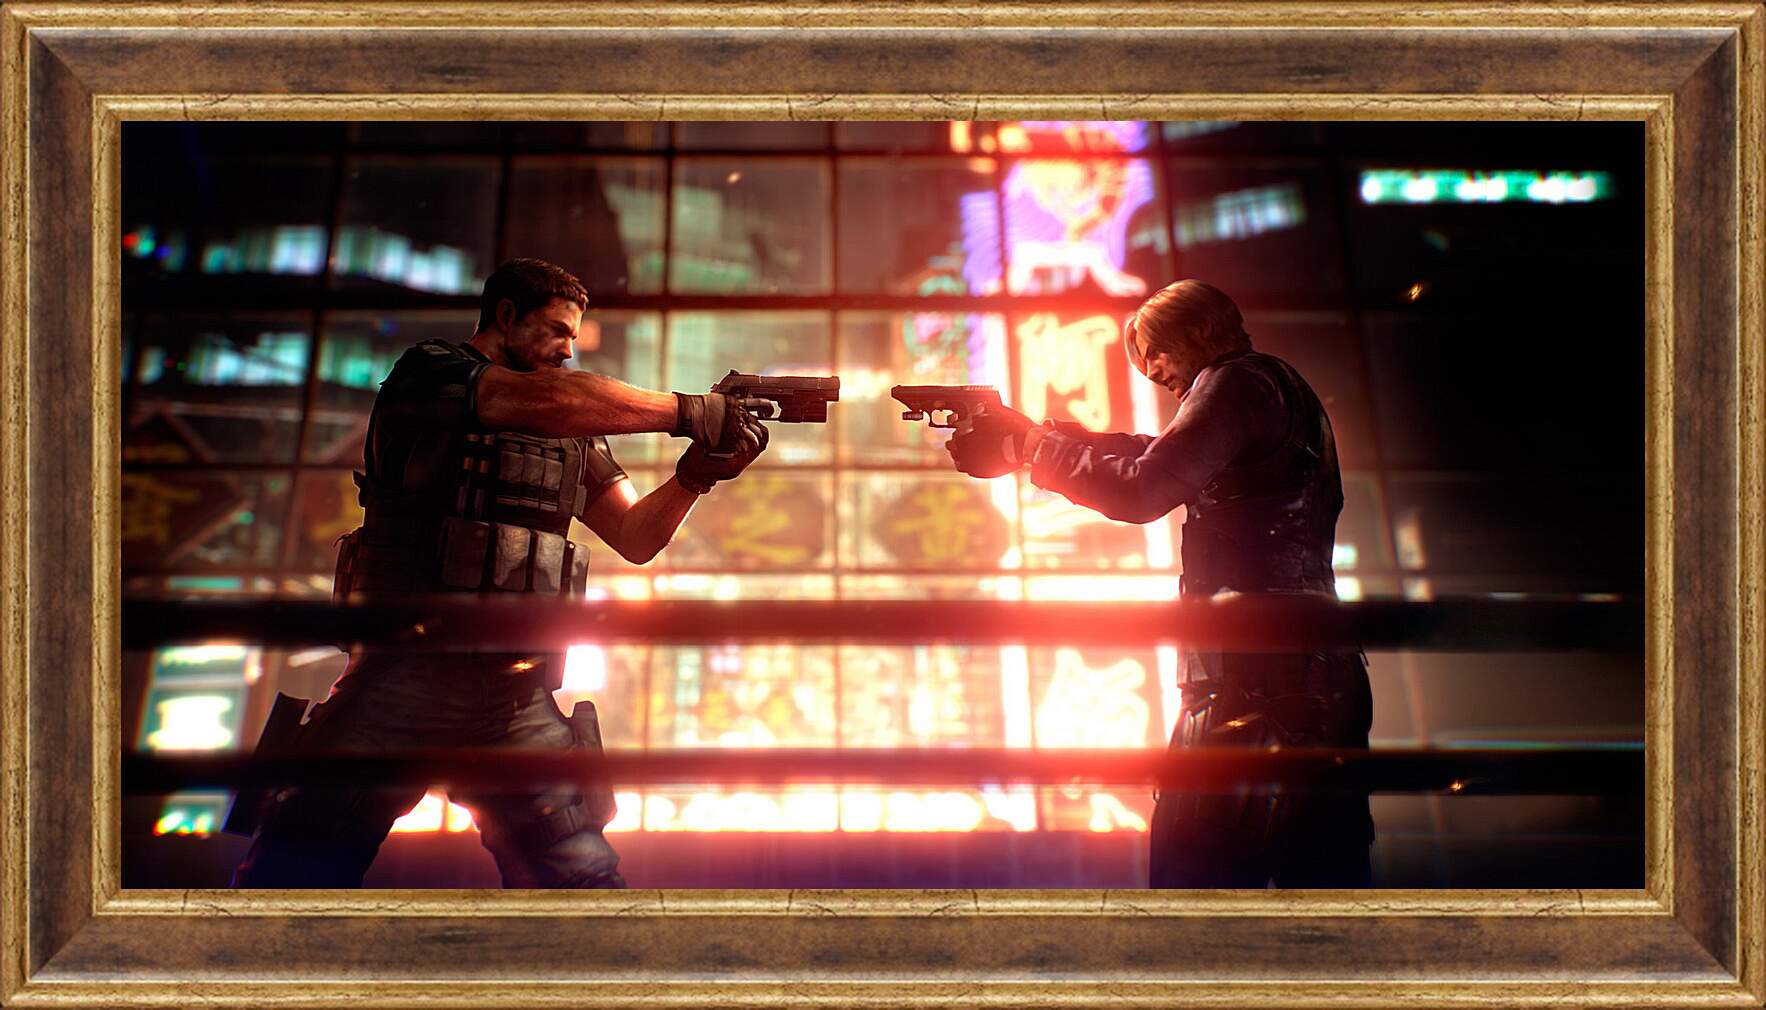 Картина в раме - Resident Evil
